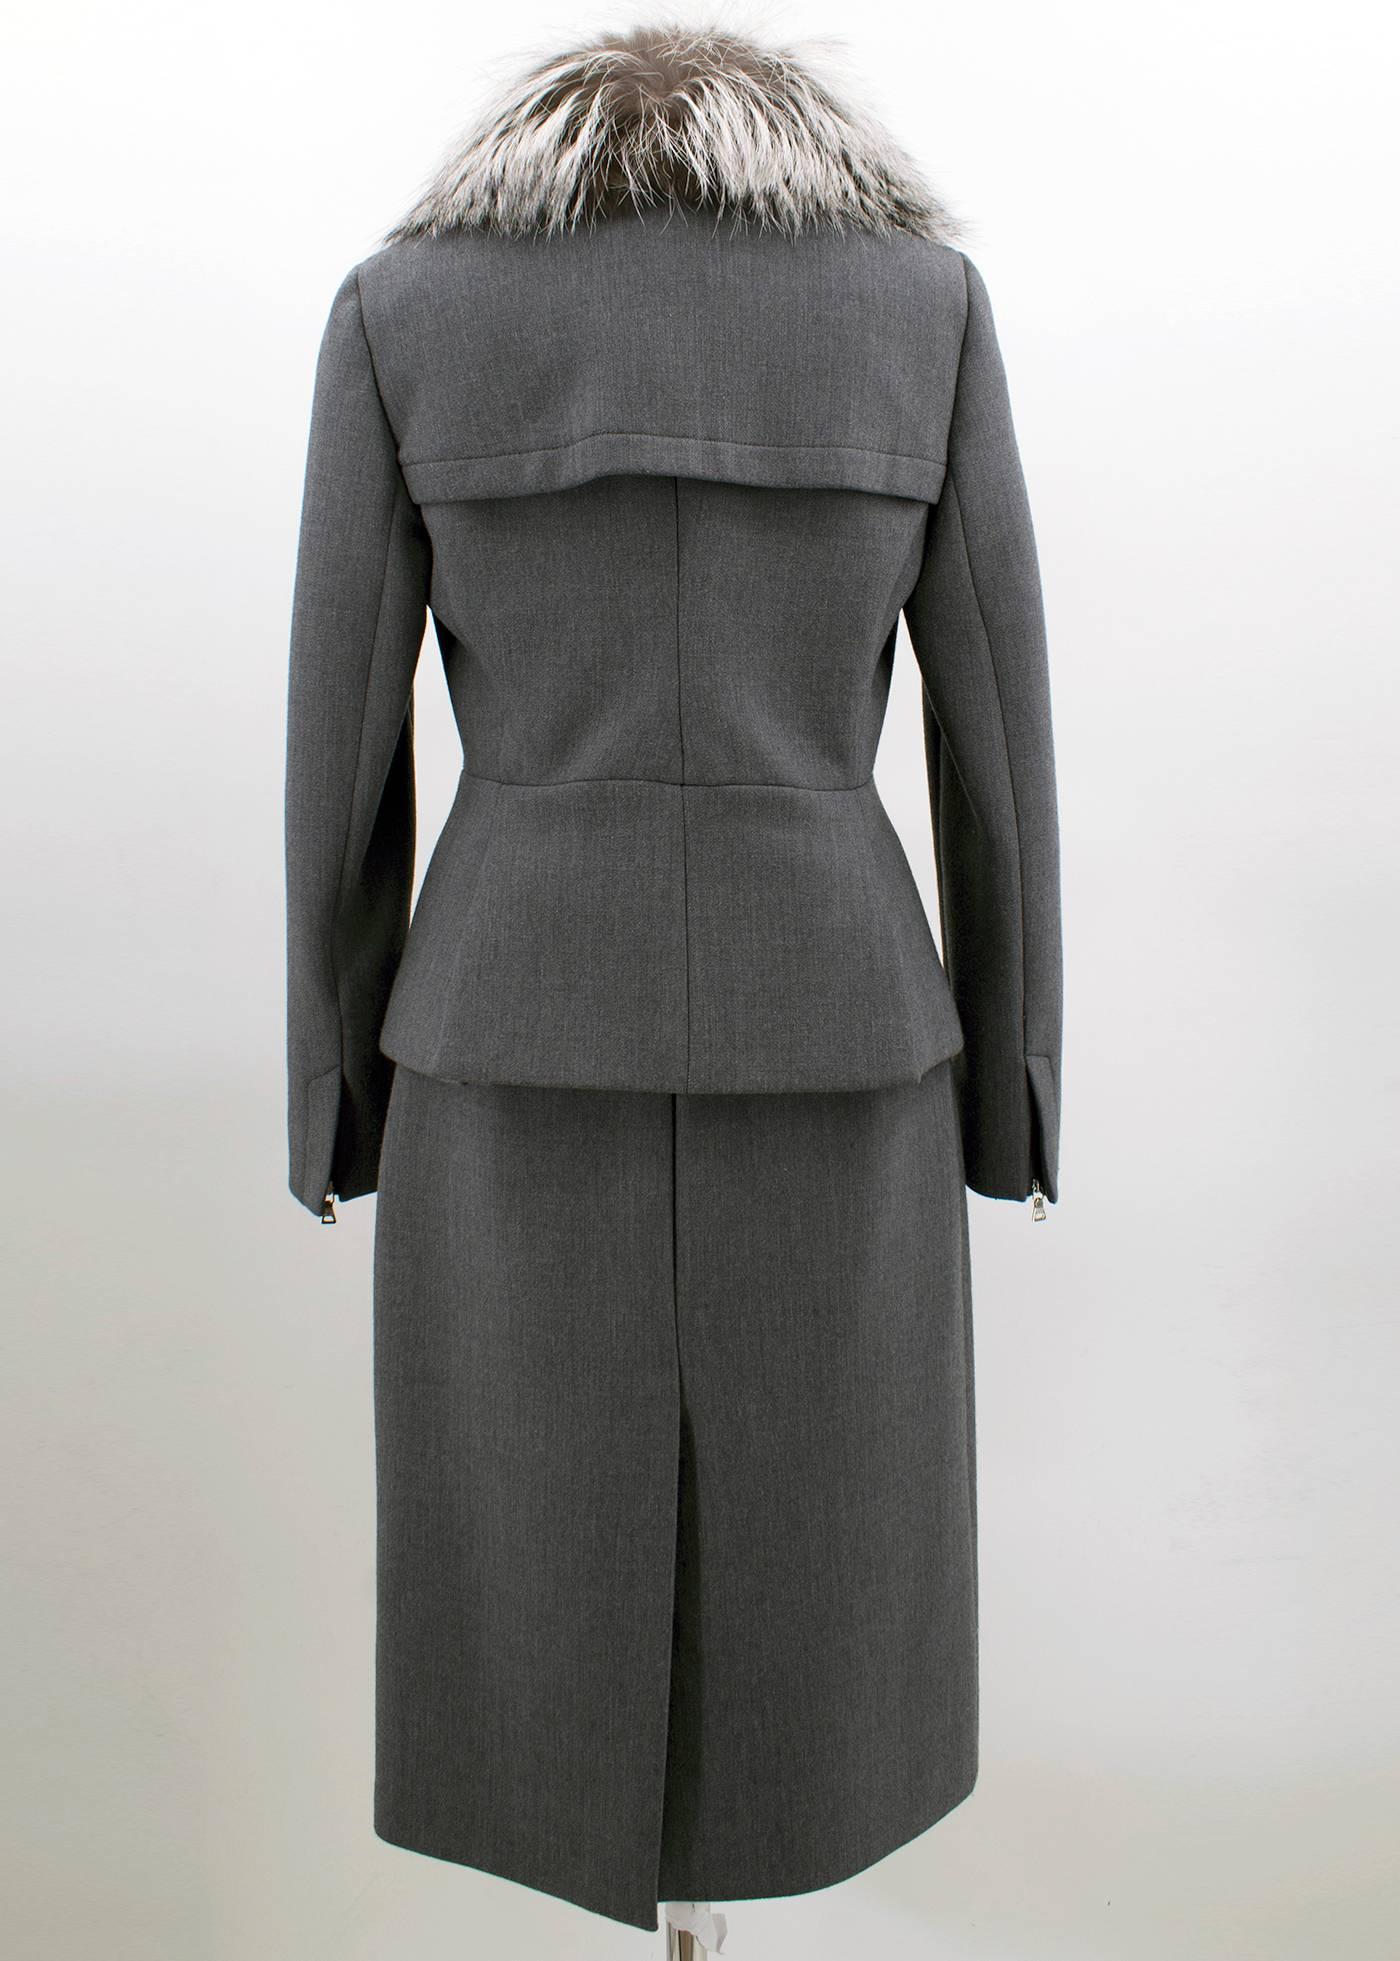 grey skirt suit